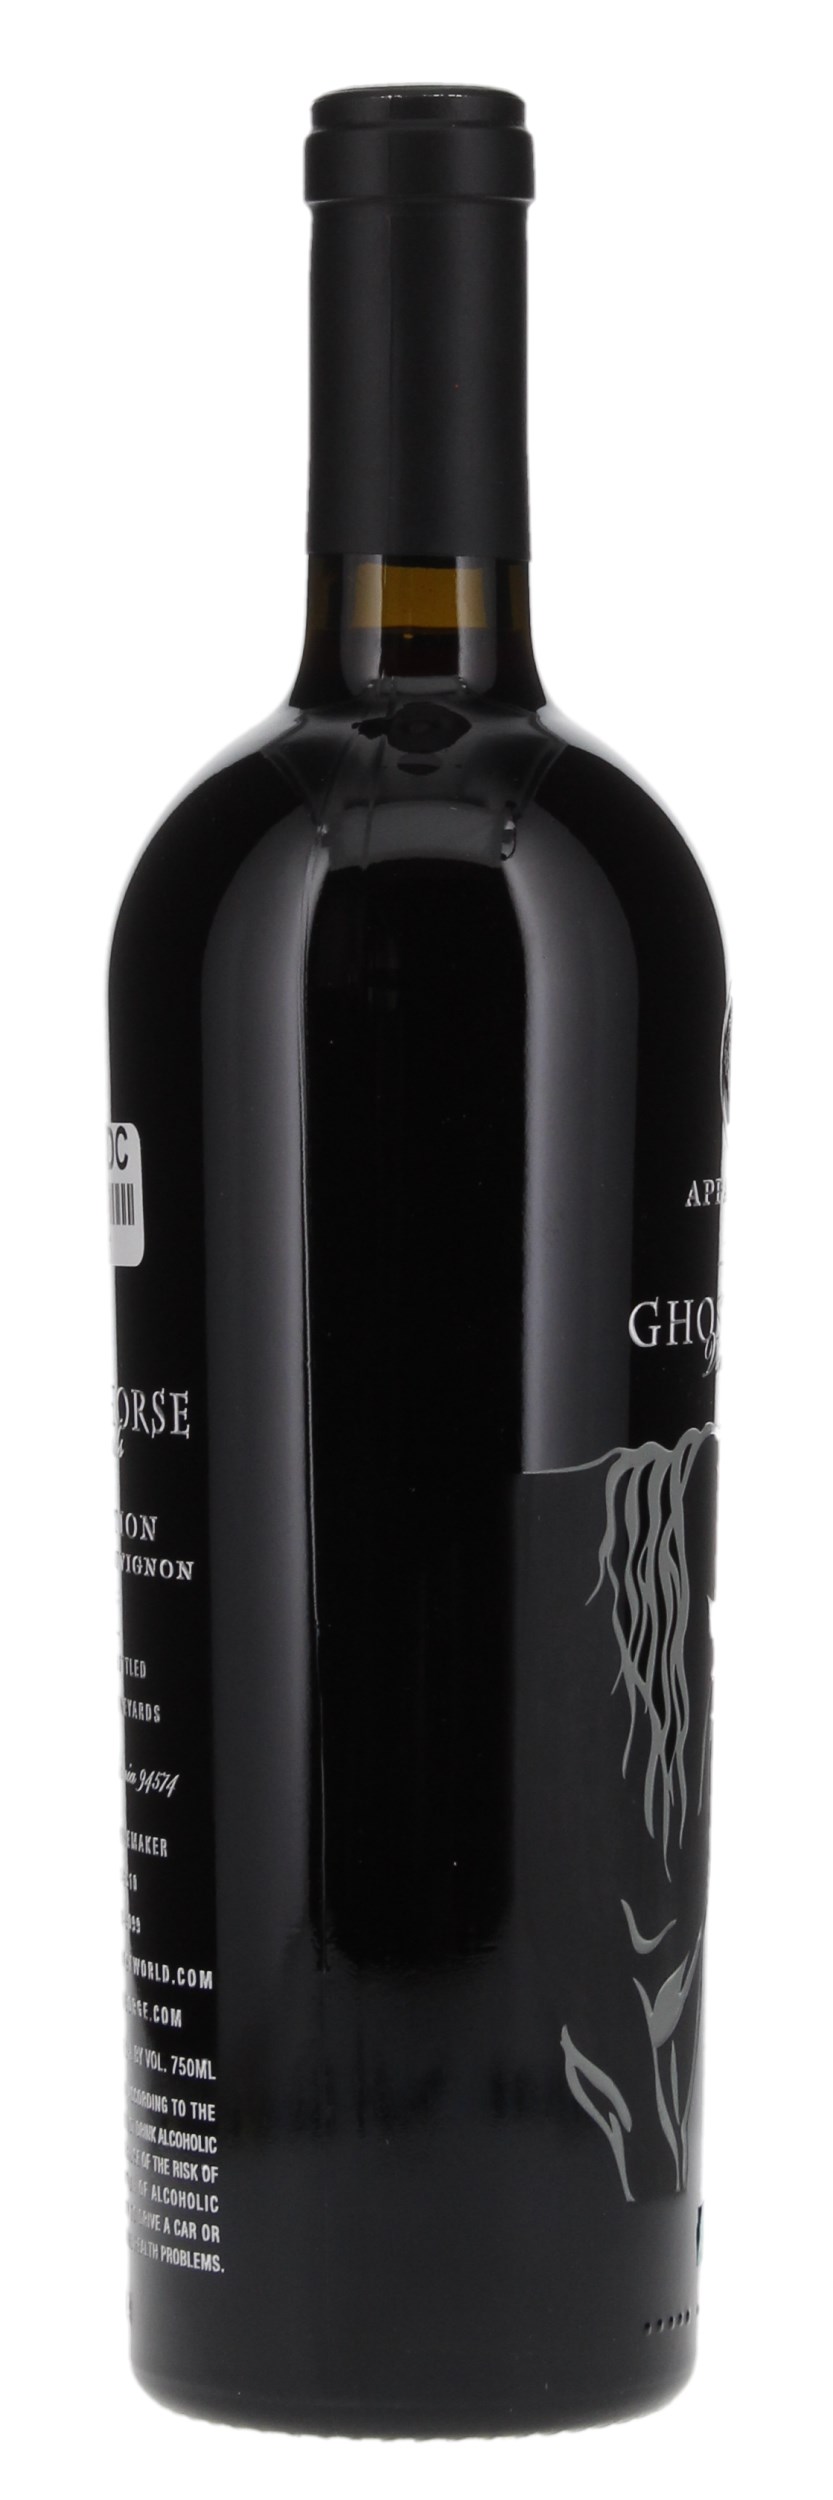 2011 Ghost Horse Vineyard Apparition Cabernet Sauvignon, 750ml